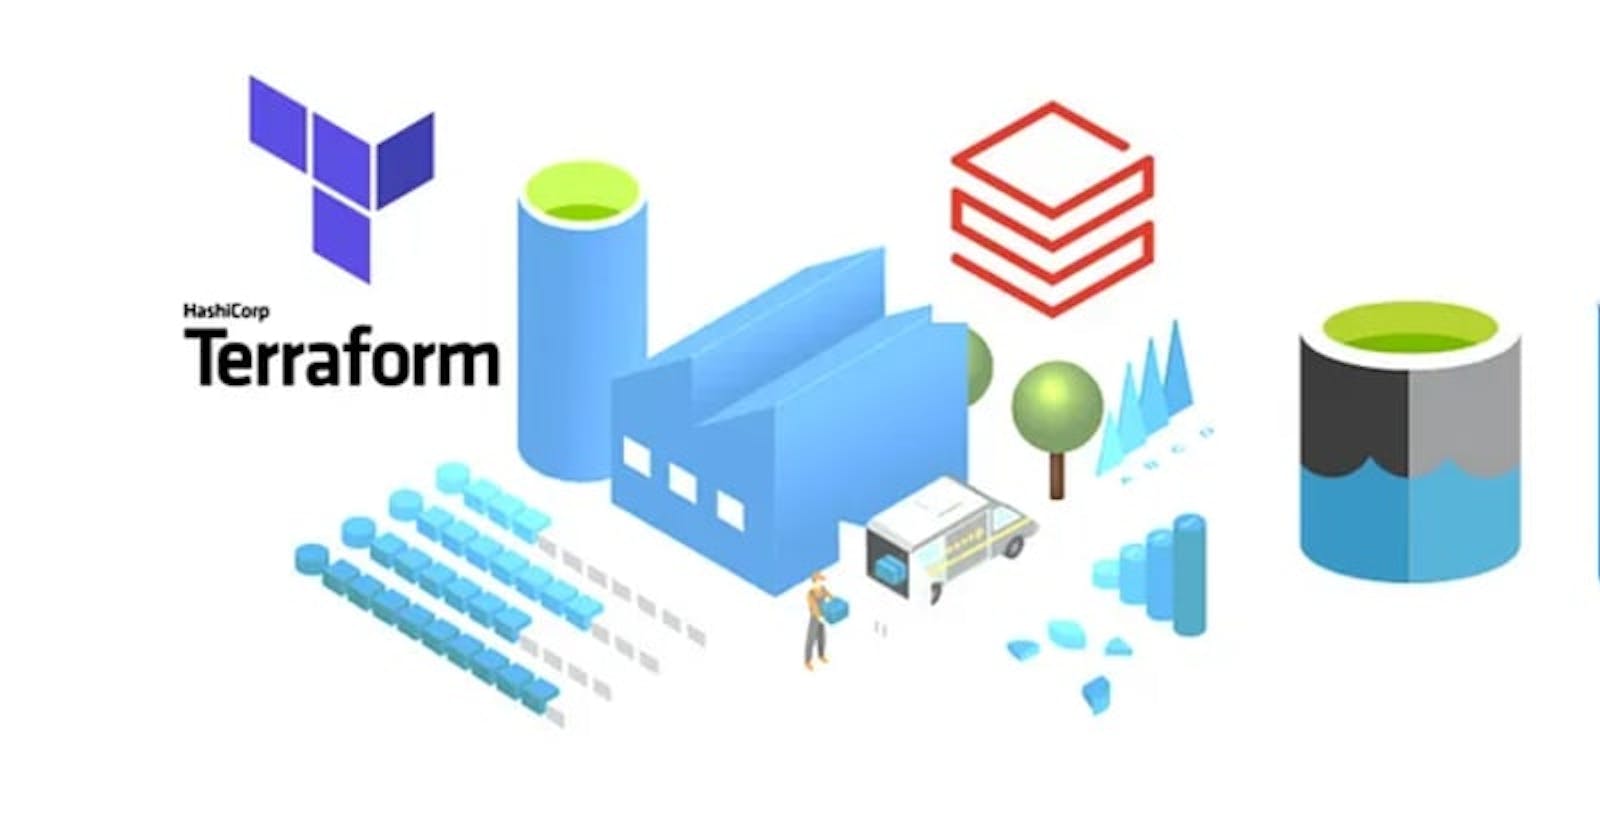 Deploying Azure Data Factory, Azure Data bricks, Azure Data Lake storage & MySql DB using Terraform